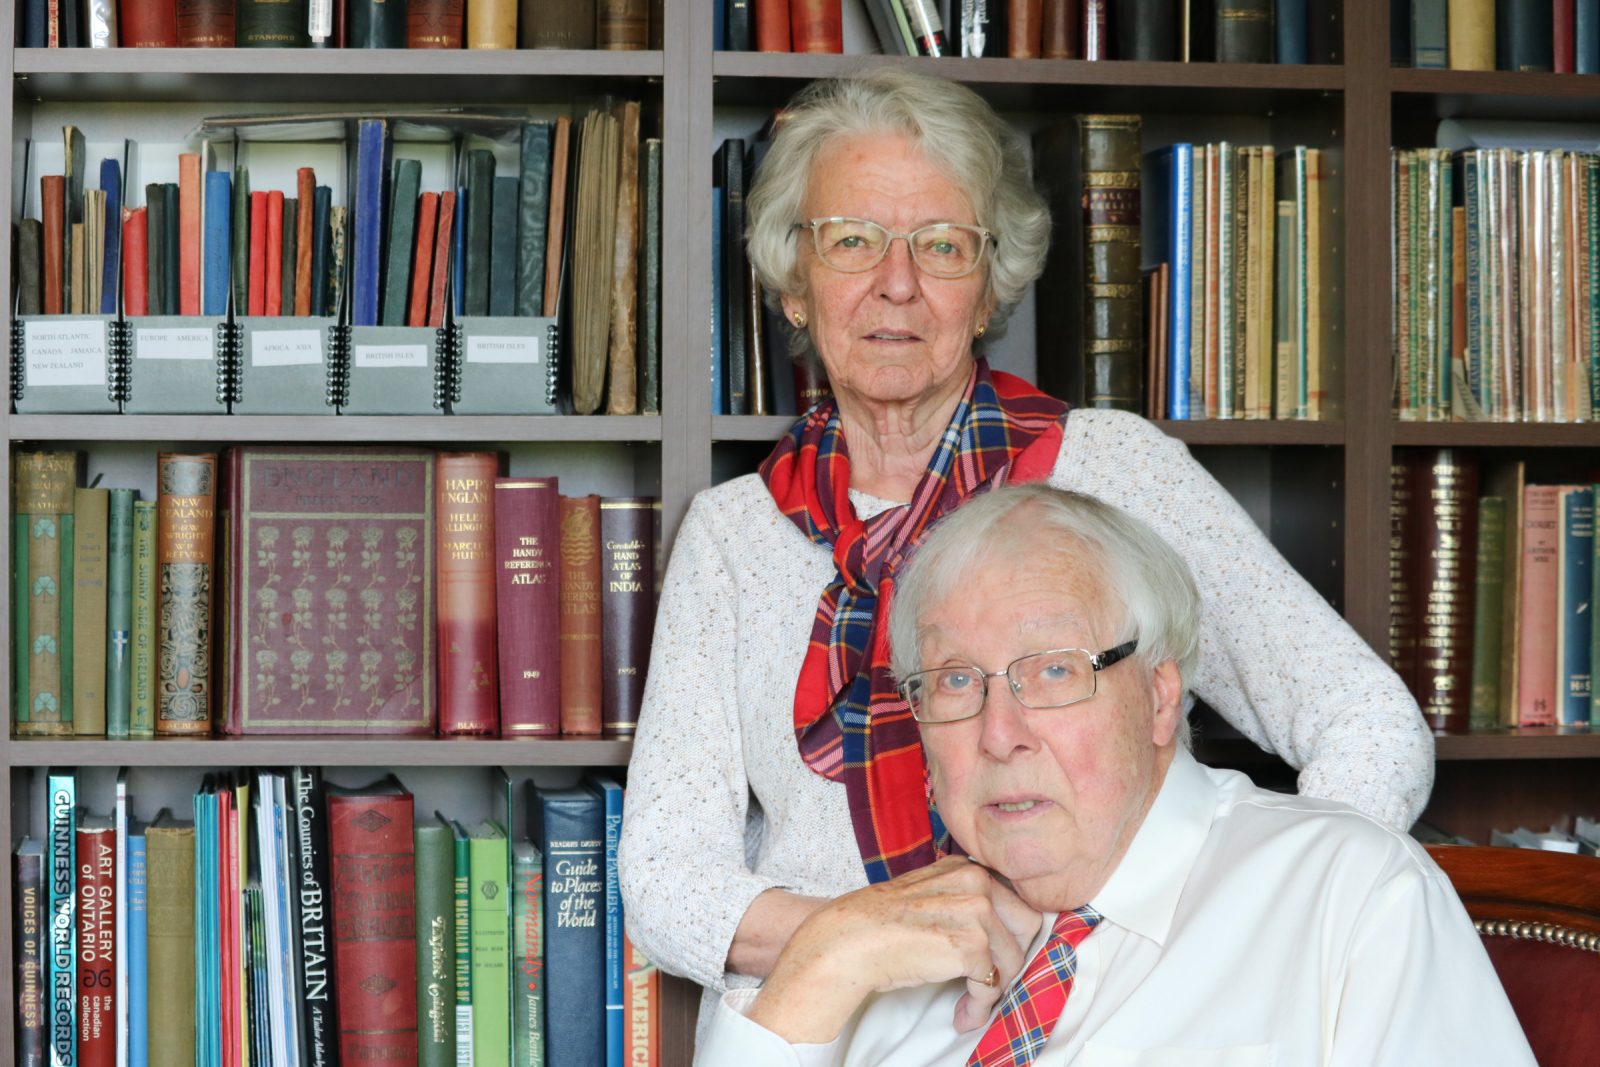 David Murray and Elizabeth Surtees pose in their personal library. Murray is wearing a Brock University tartan tie and Surtees the Brock tartan scarf.